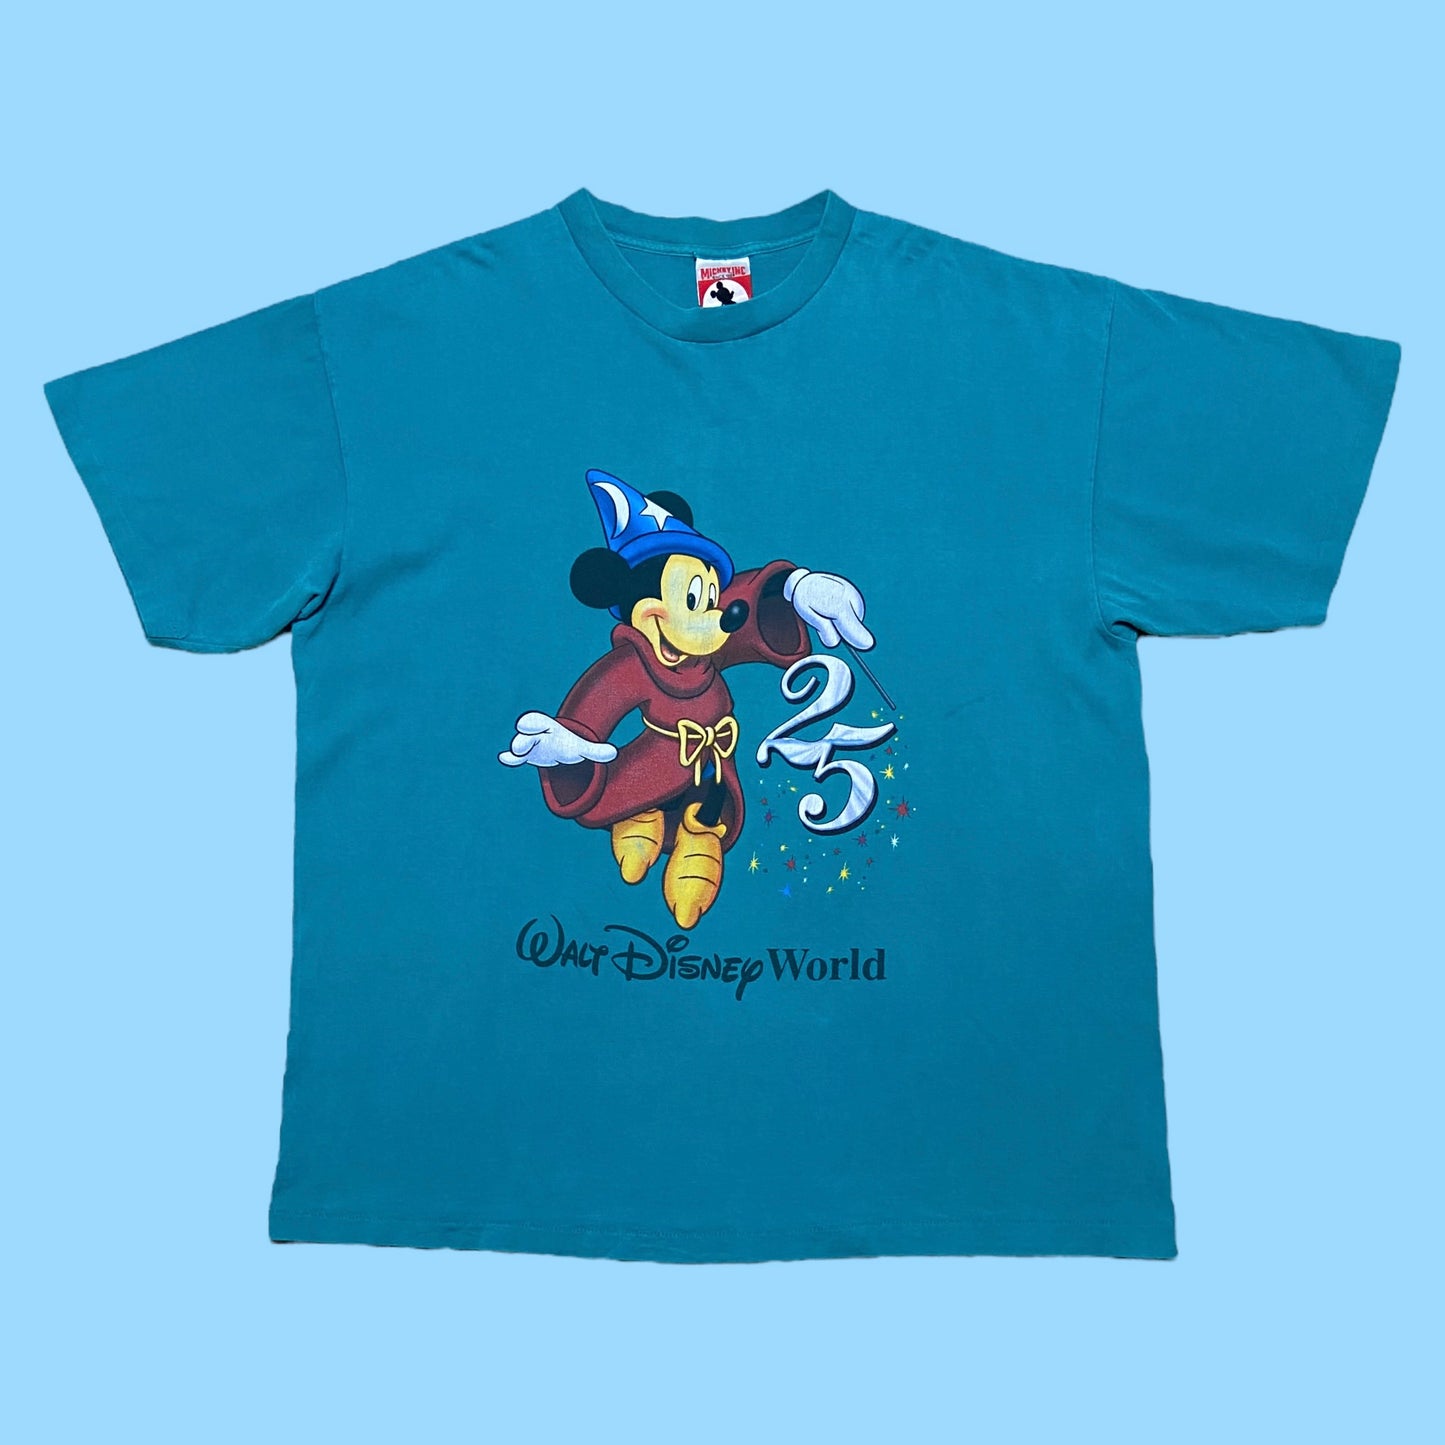 Vintage 1996 Disney World 25th anniversary t-shirt - XXL